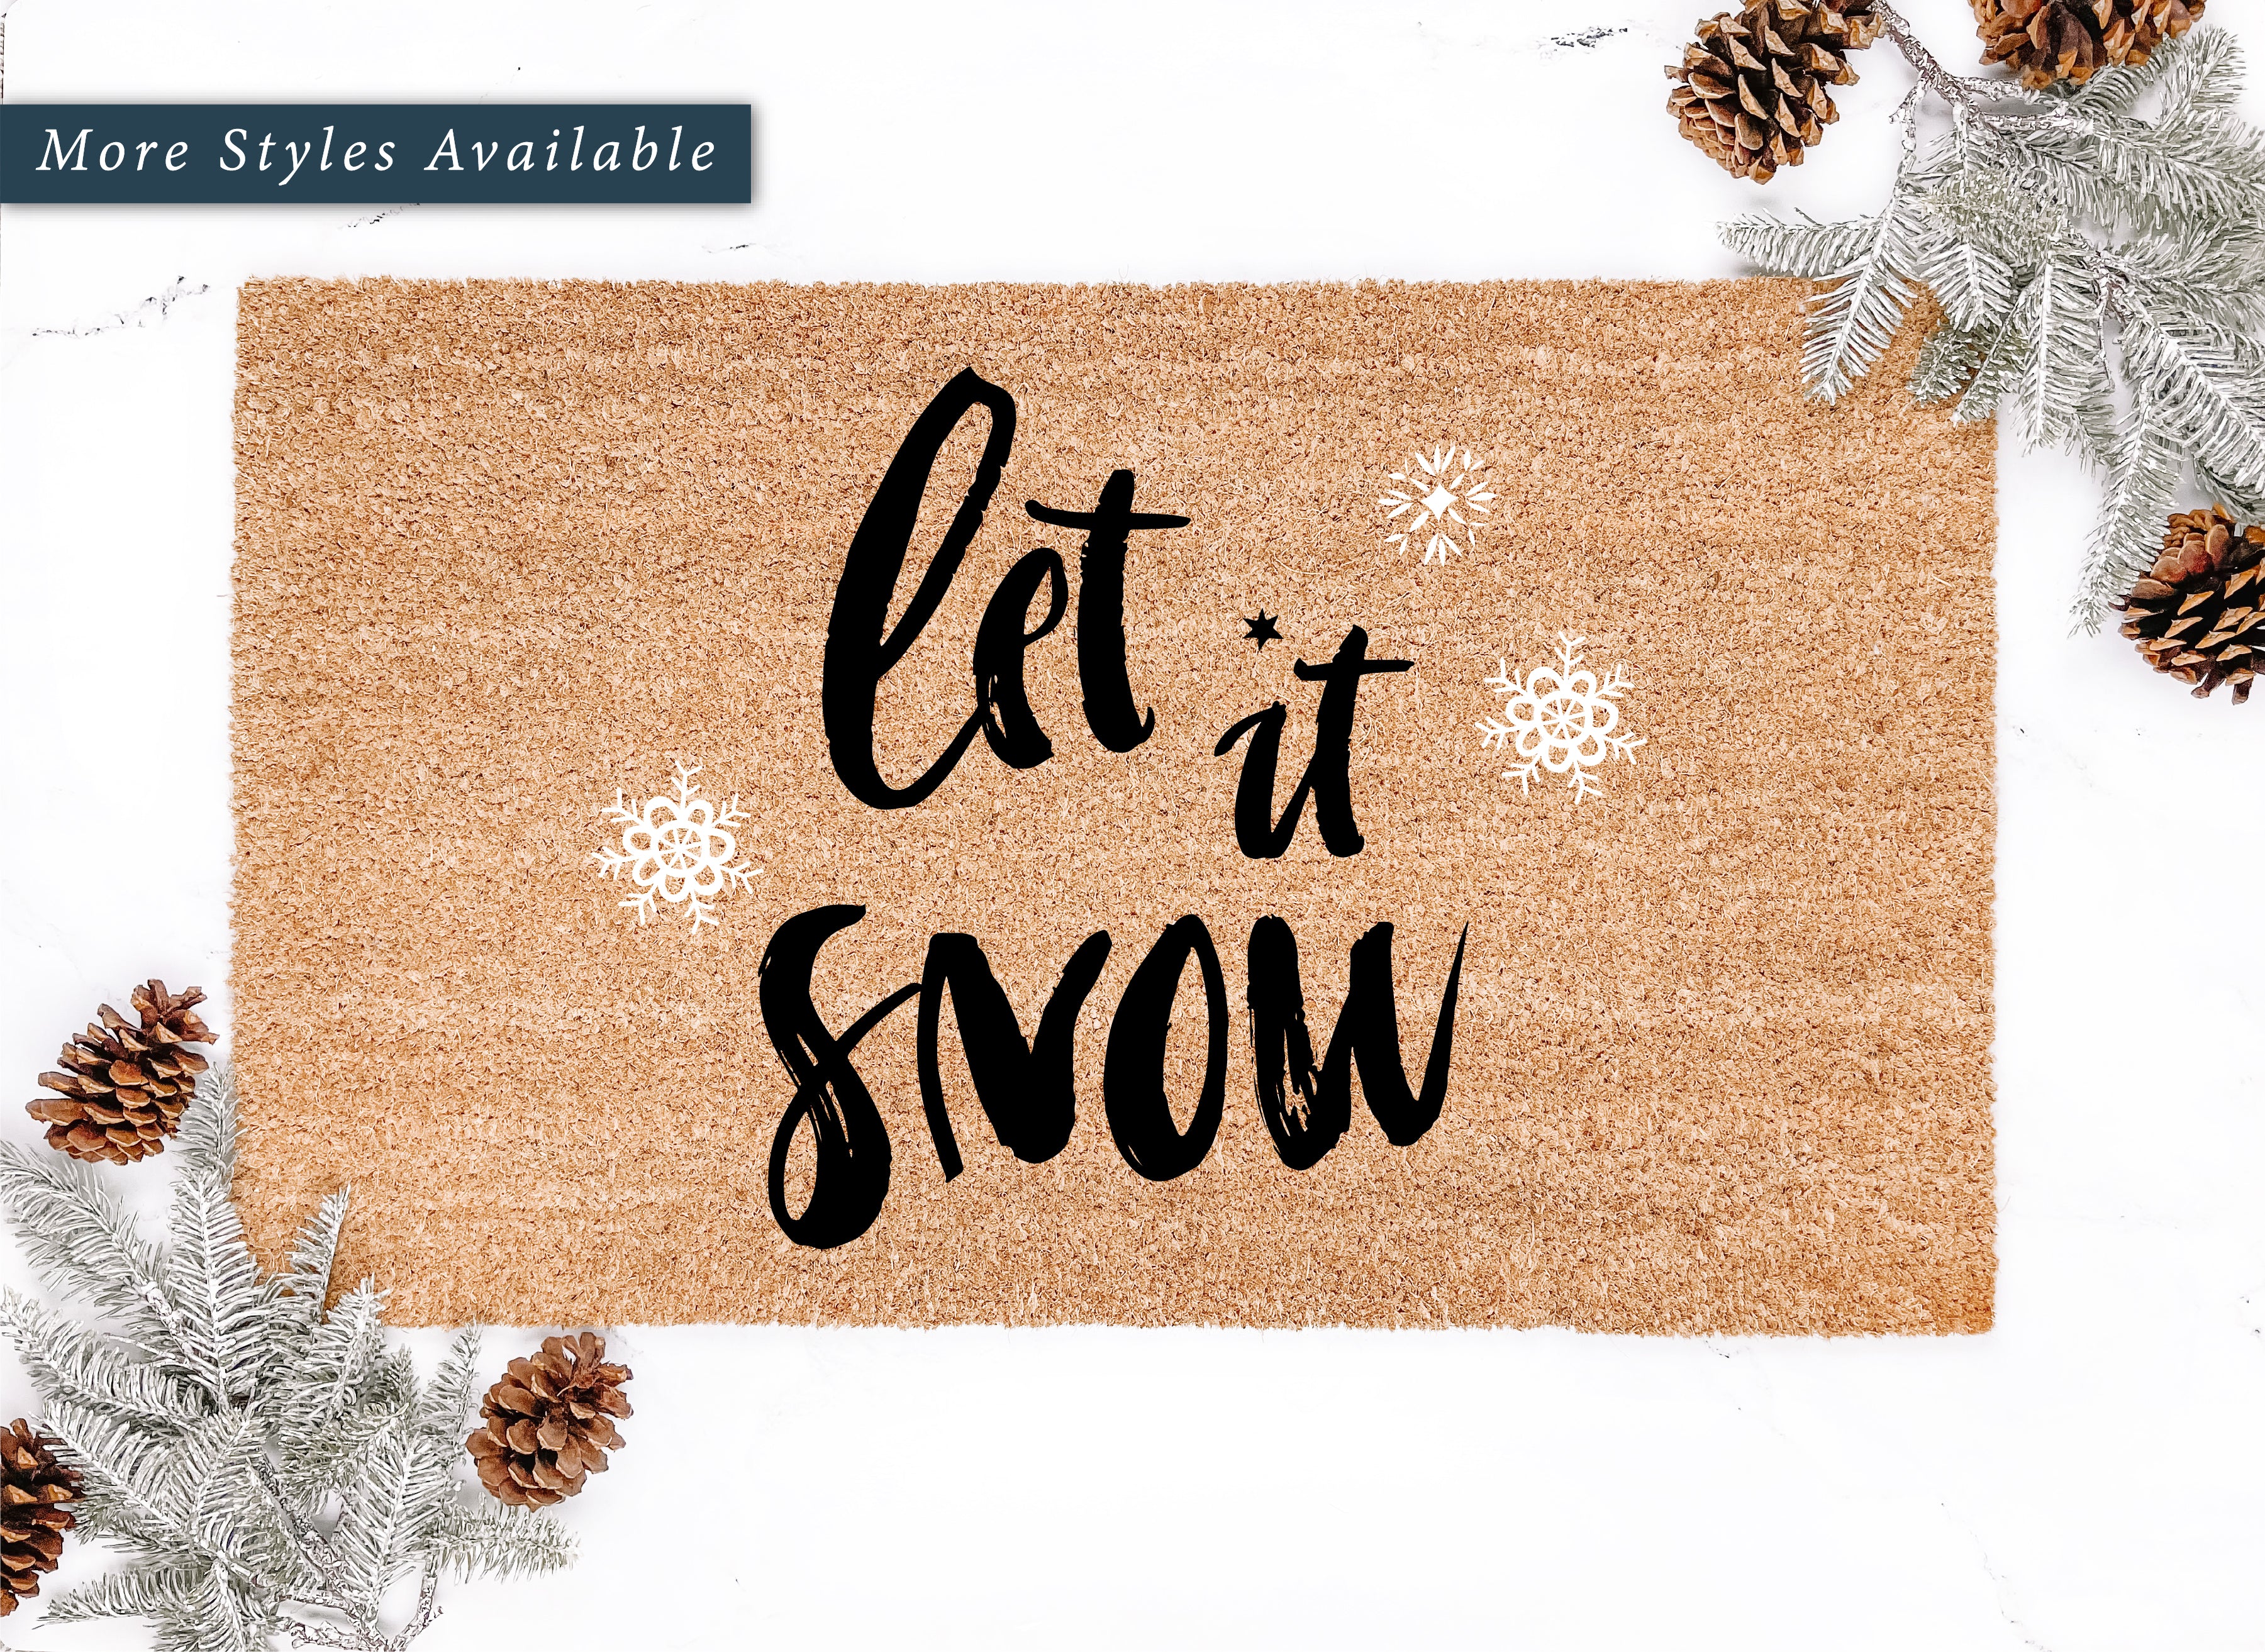 Let It Snow (Snowflakes) Doormat